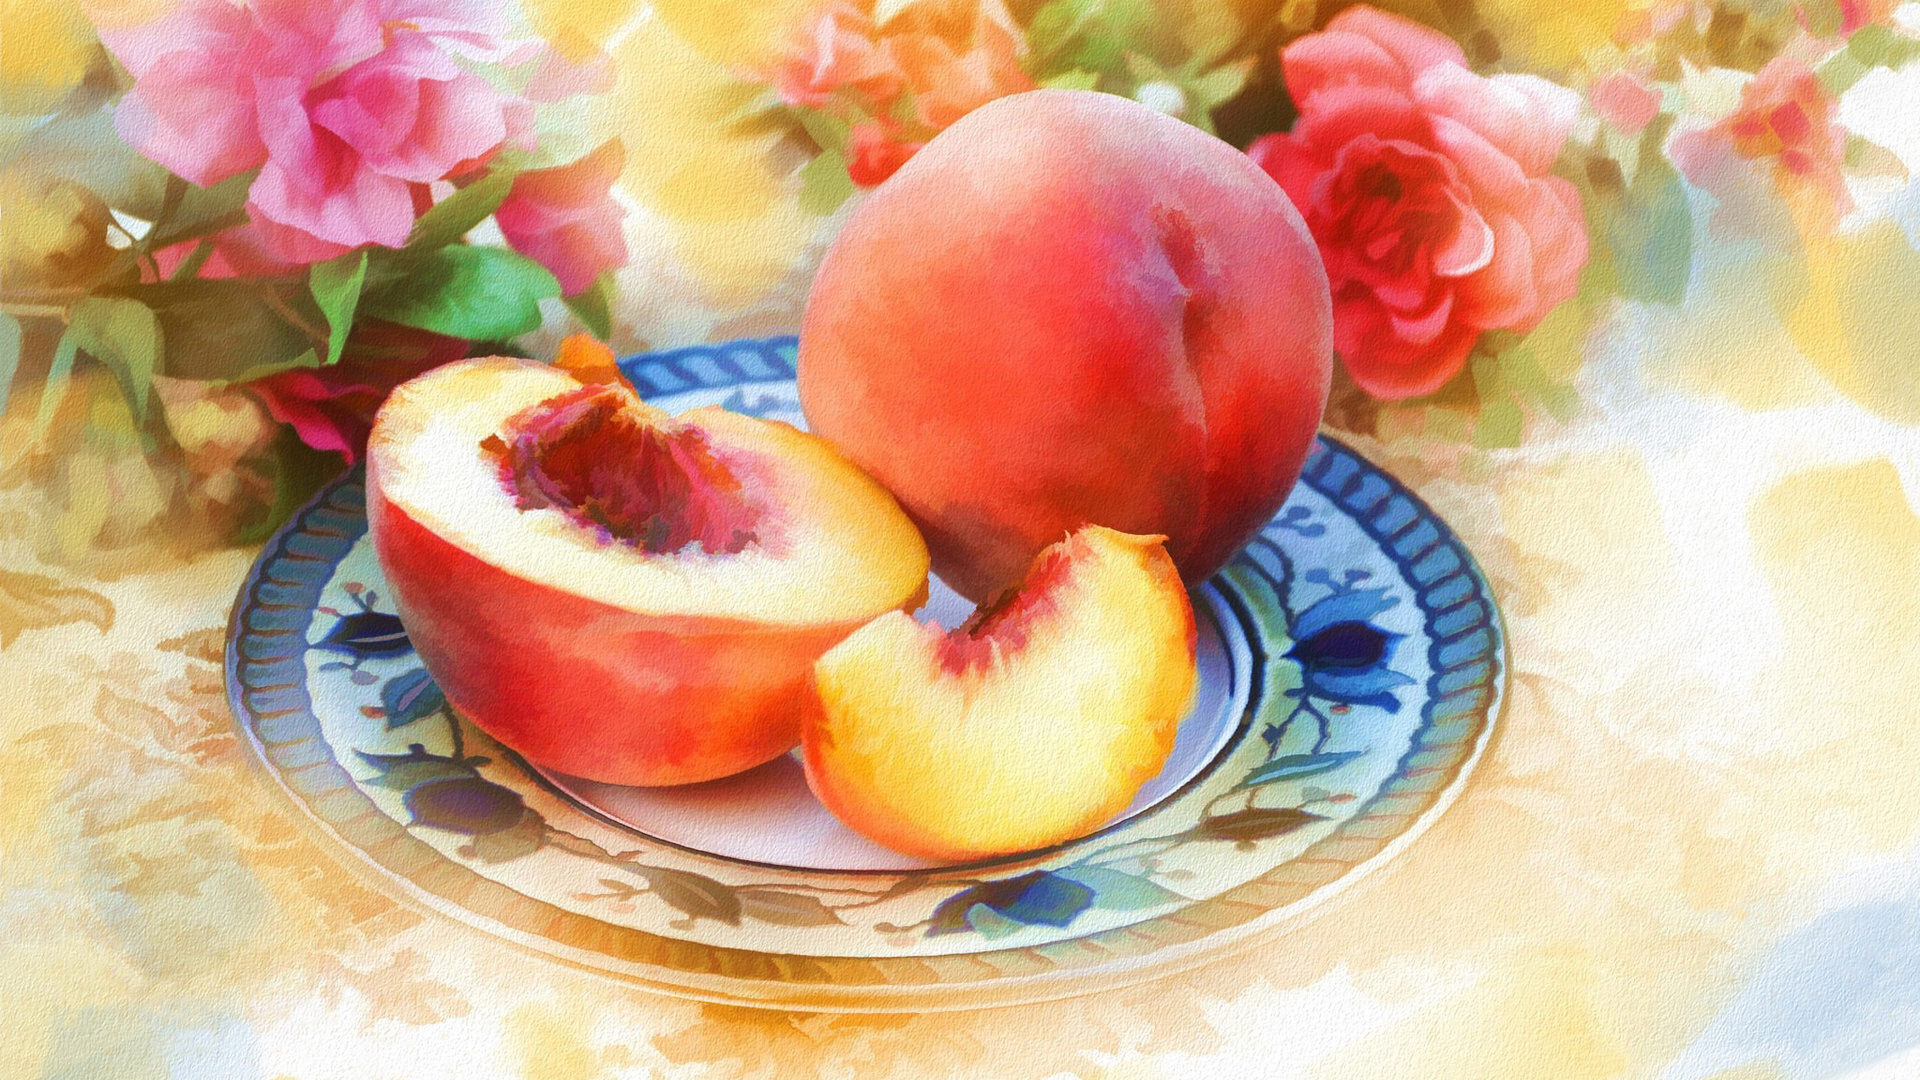 Artistic Flower Painting Peach Plate Still Life 1920x1080